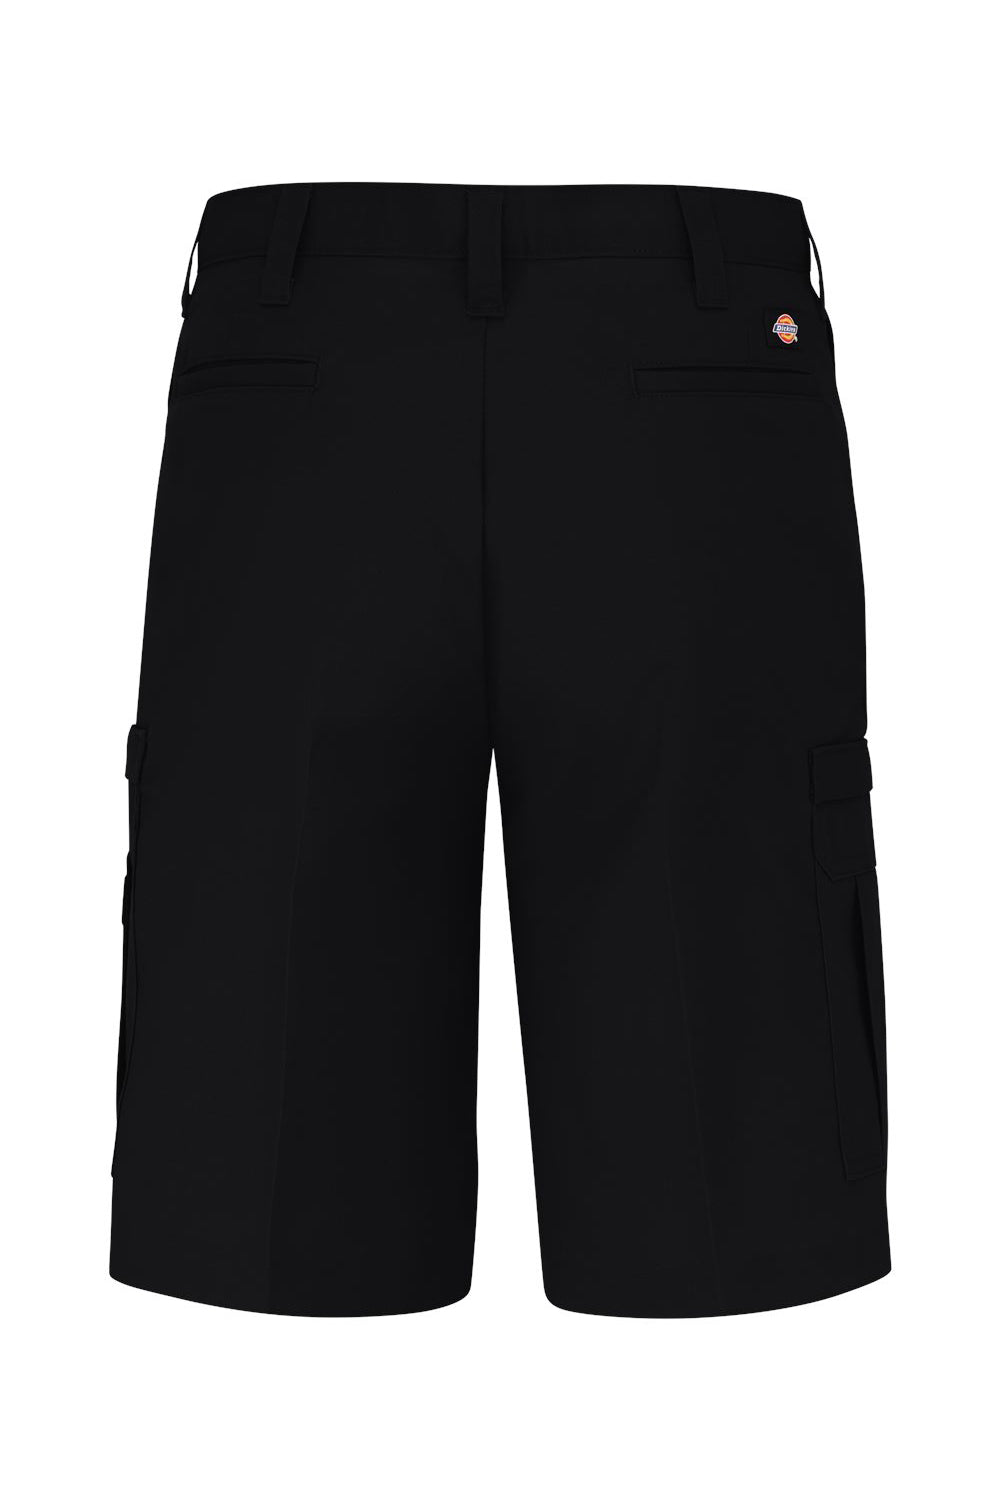 Dickies LR42 Mens Premium Moisture Wicking Industrial Cargo Shorts w/ Pockets Black Flat Back